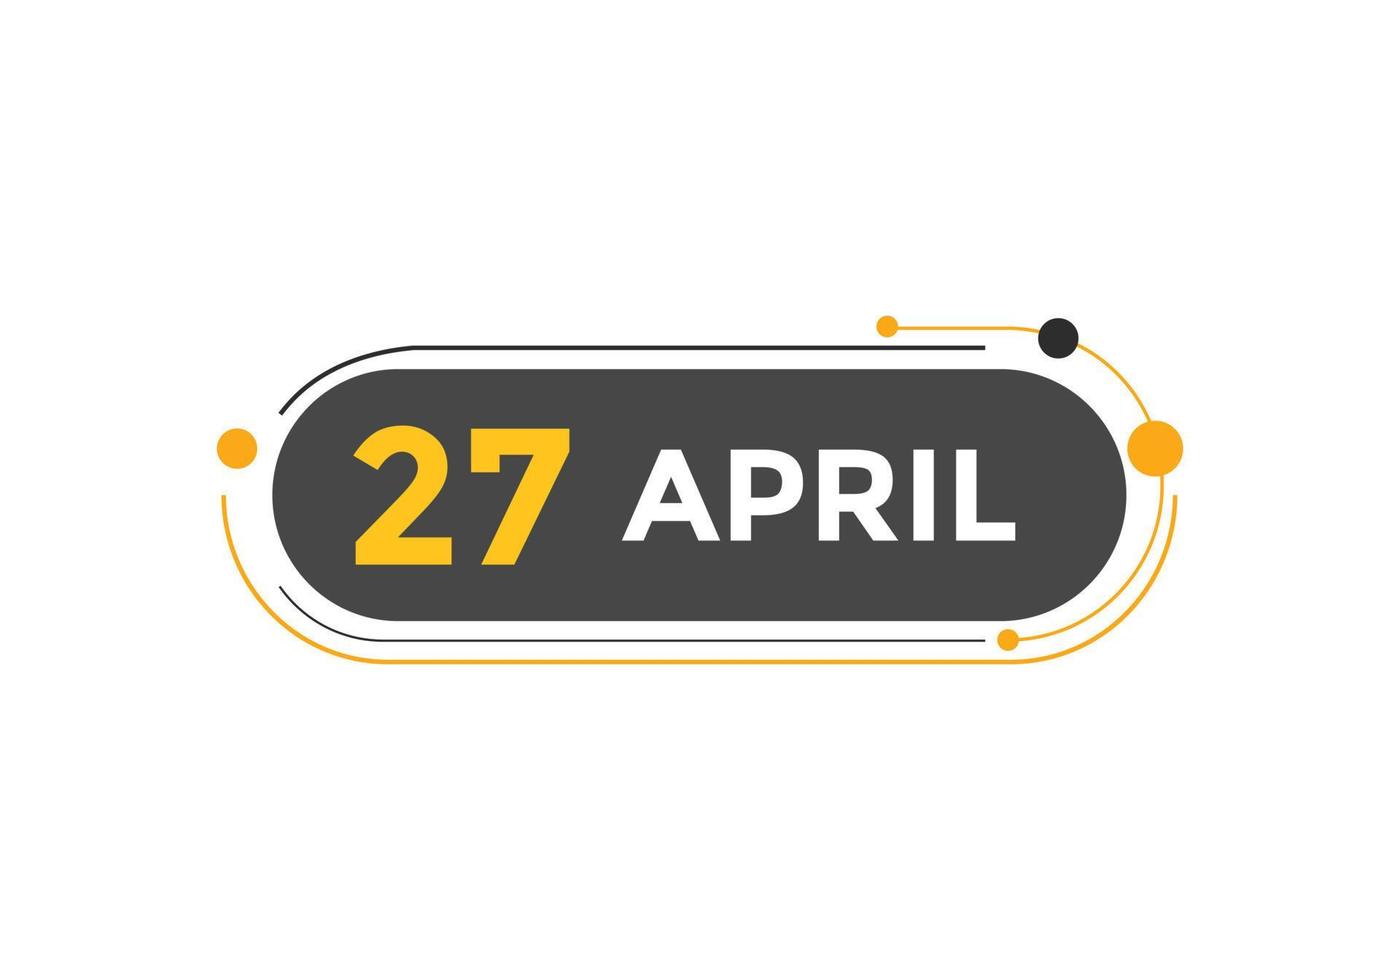 april 27 kalender påminnelse. 27: e april dagligen kalender ikon mall. kalender 27: e april ikon design mall. vektor illustration